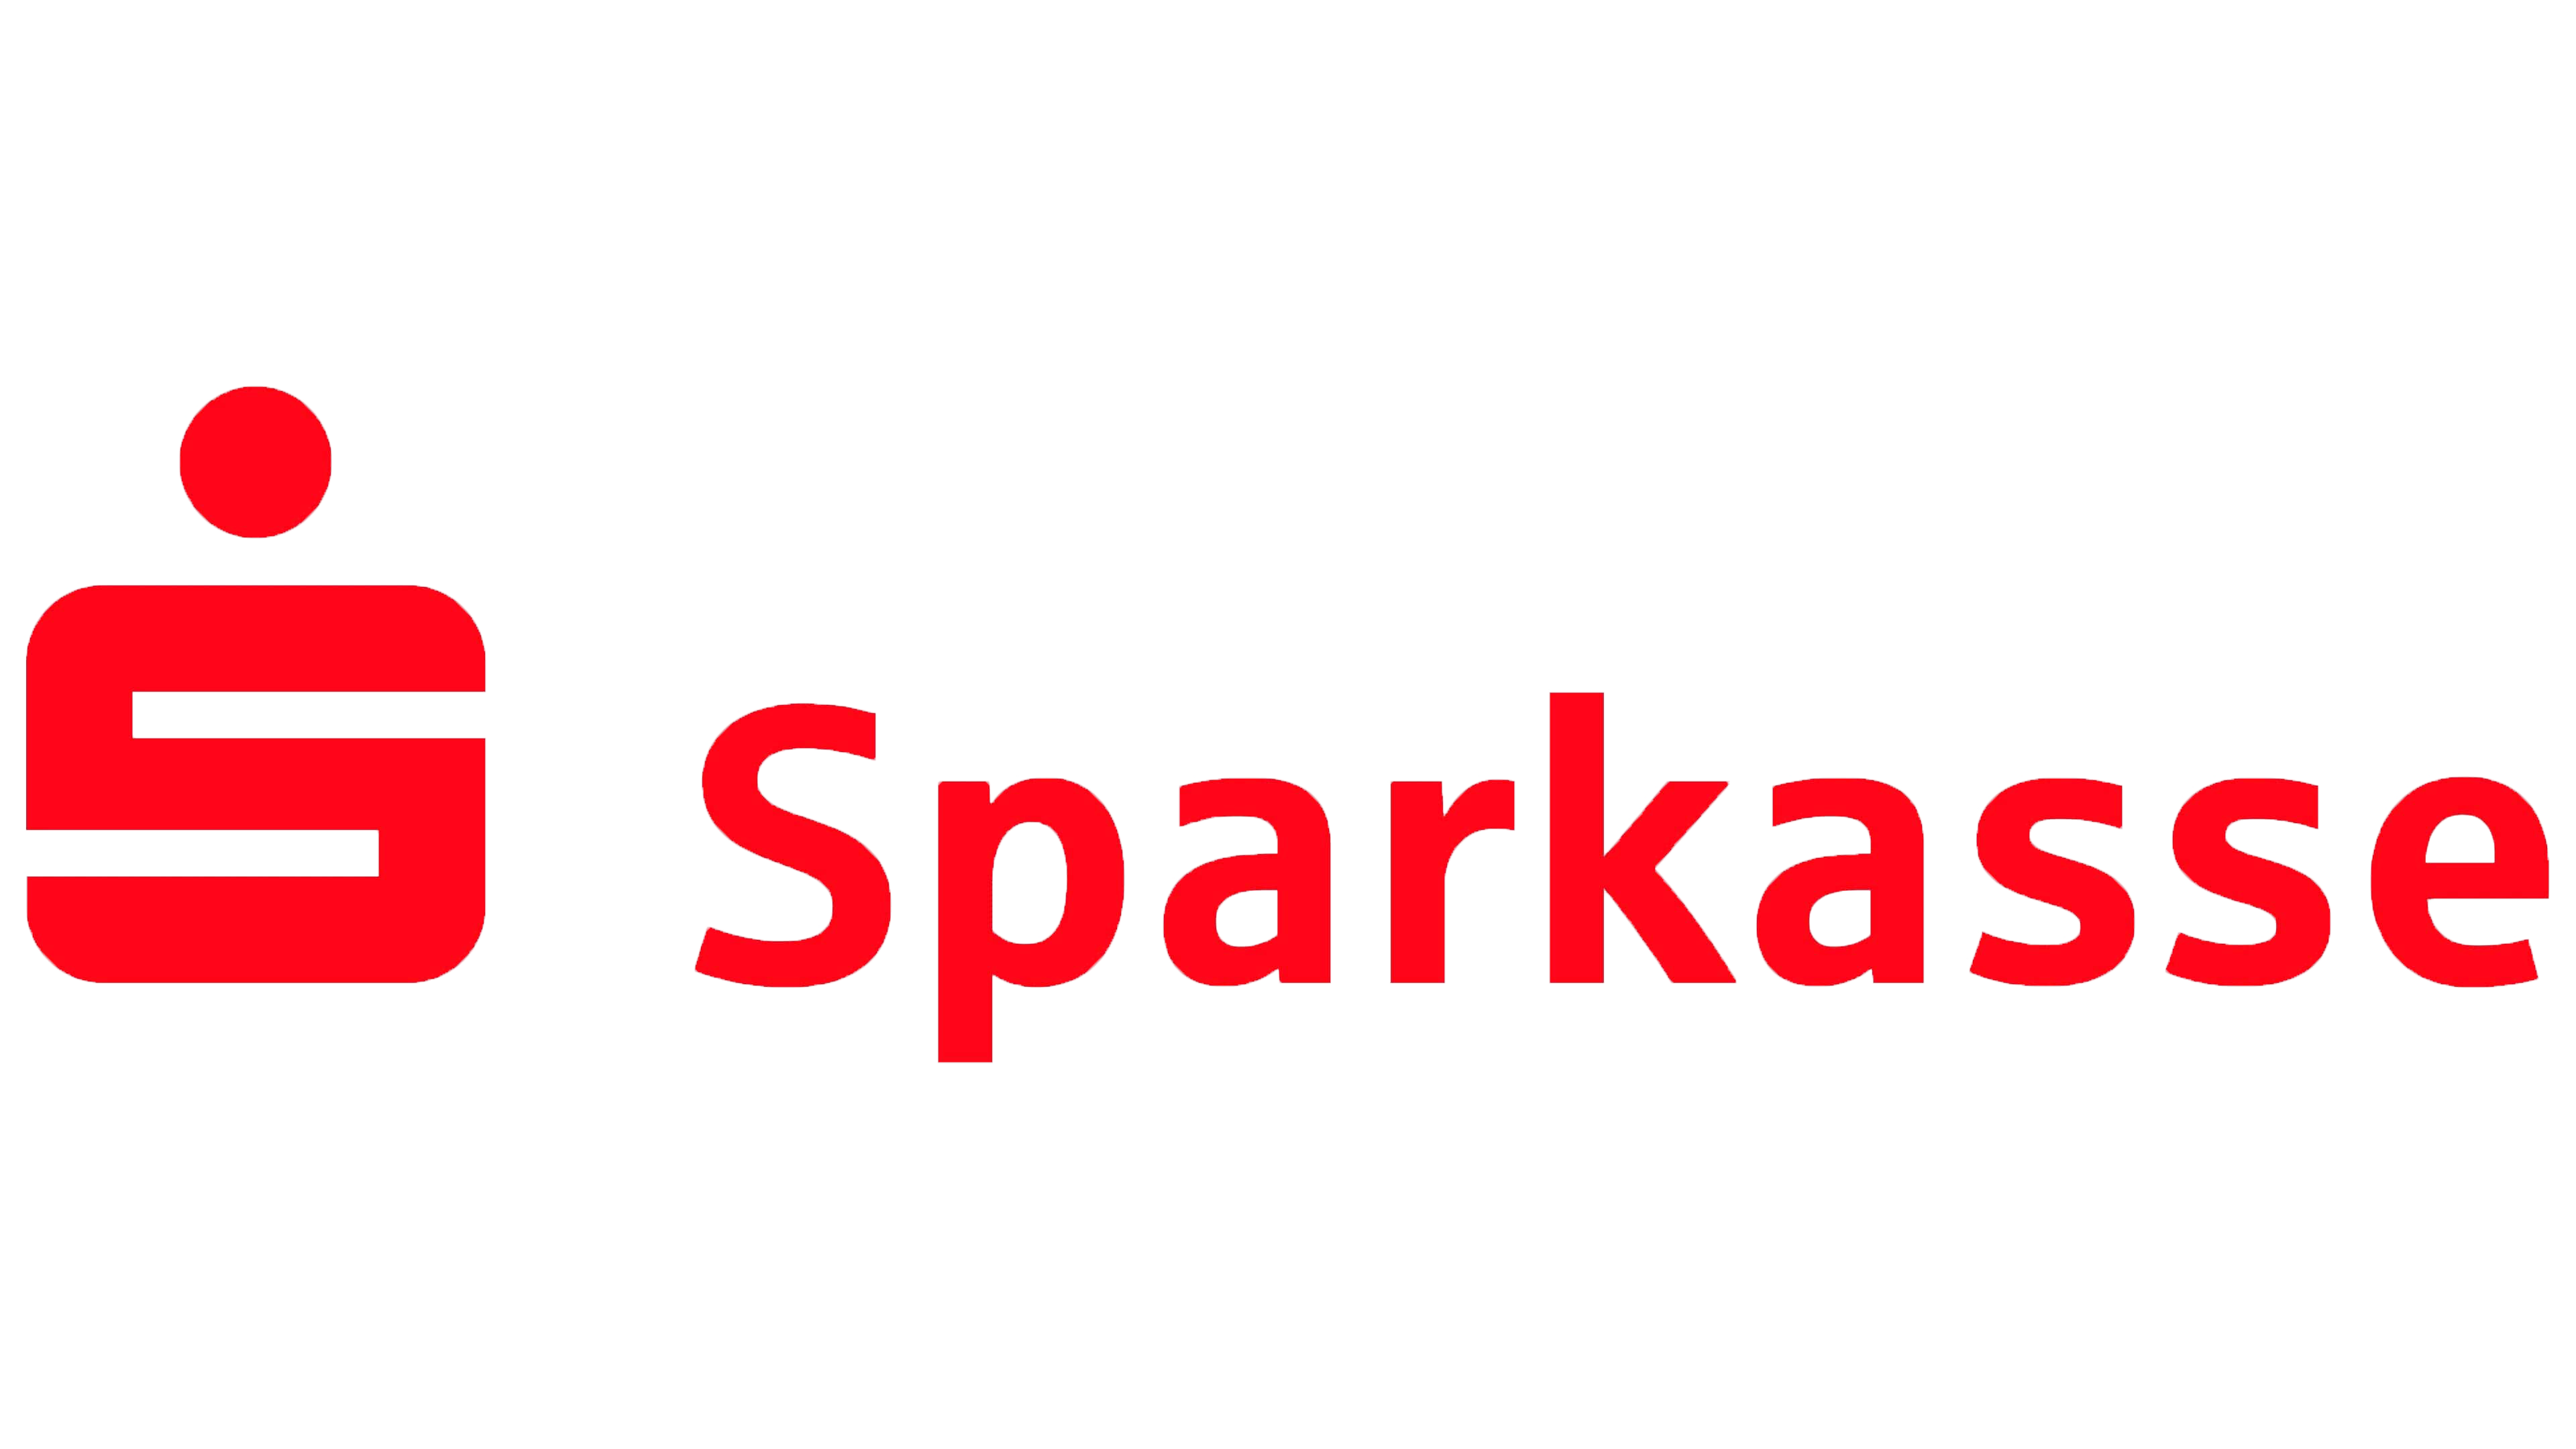 Sparkassen-Logo